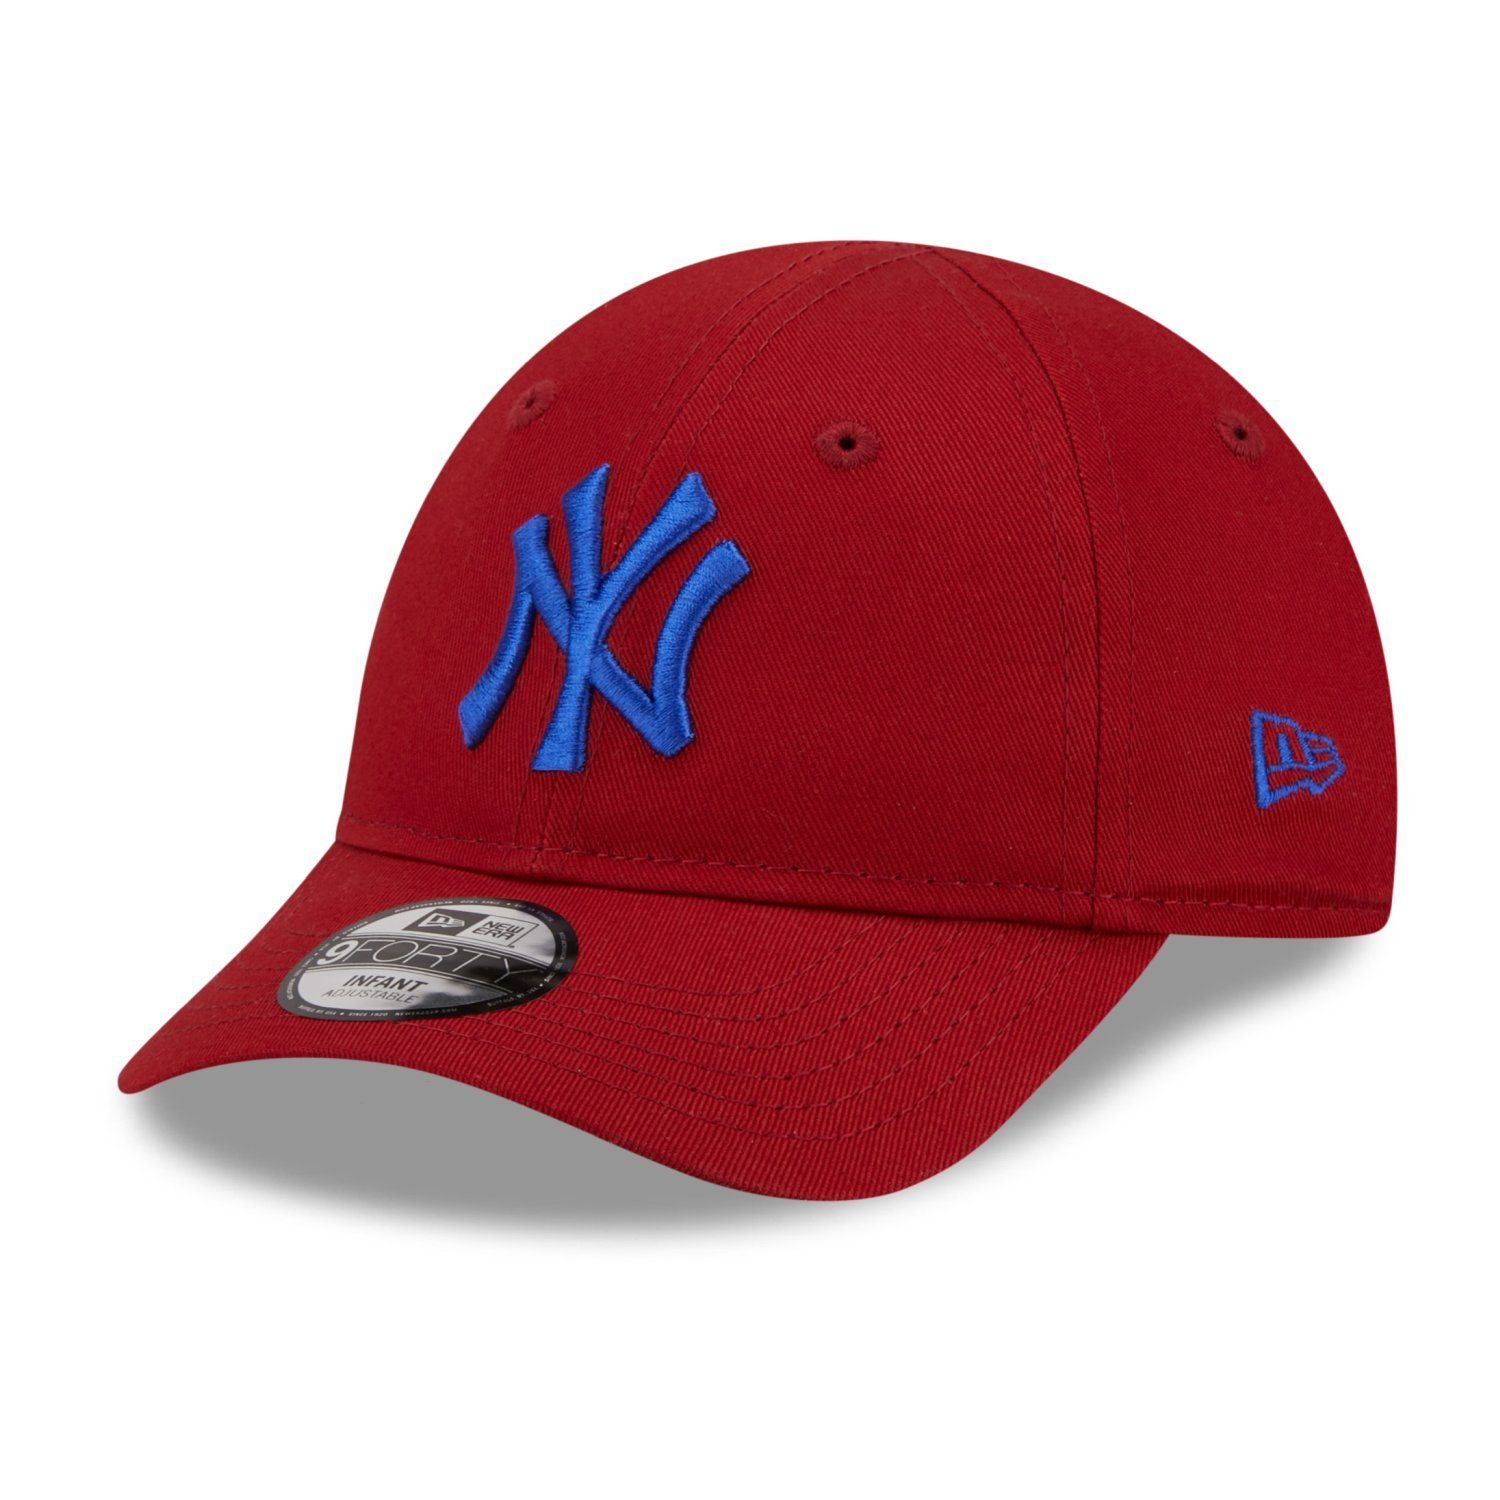 Baseball New York Cap Yankees 9Forty Era New